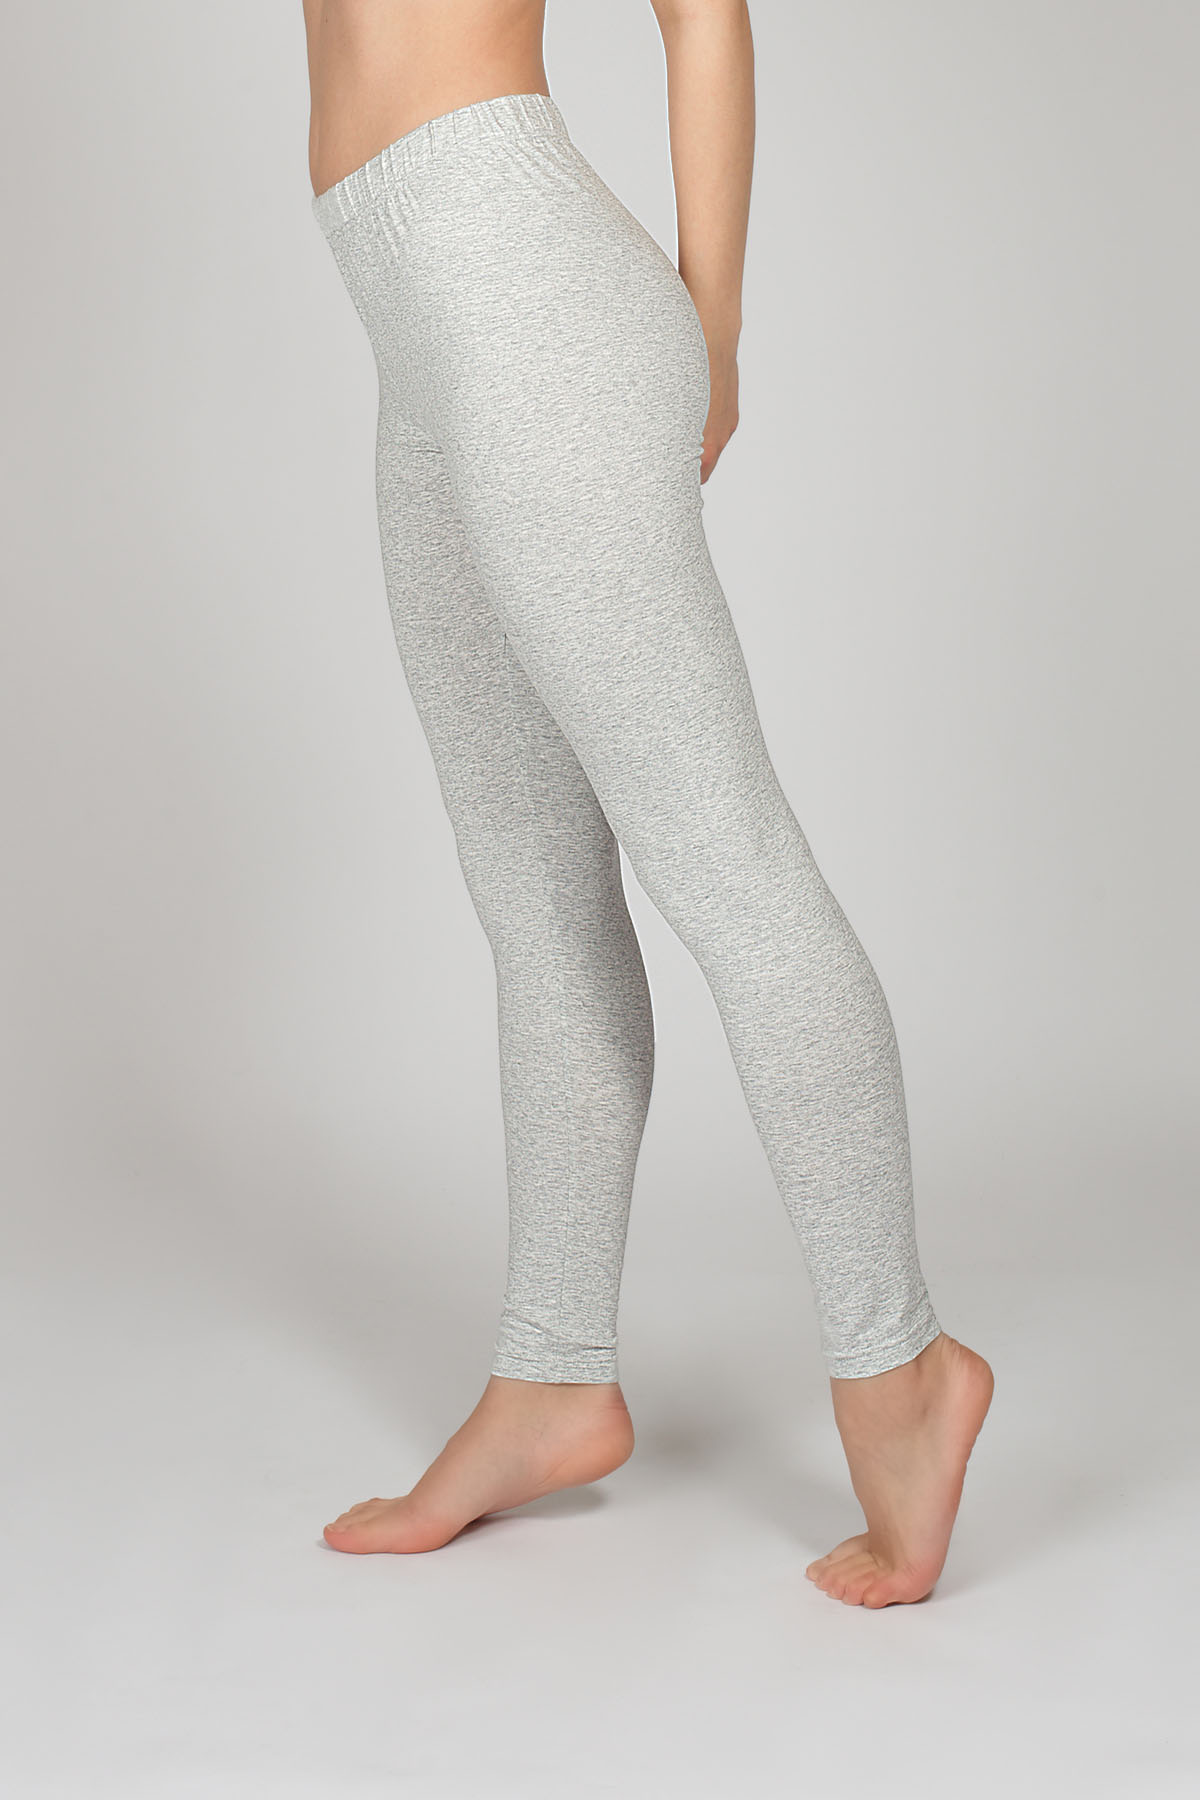 Kadın Modal Taytlı Pijama Takımı